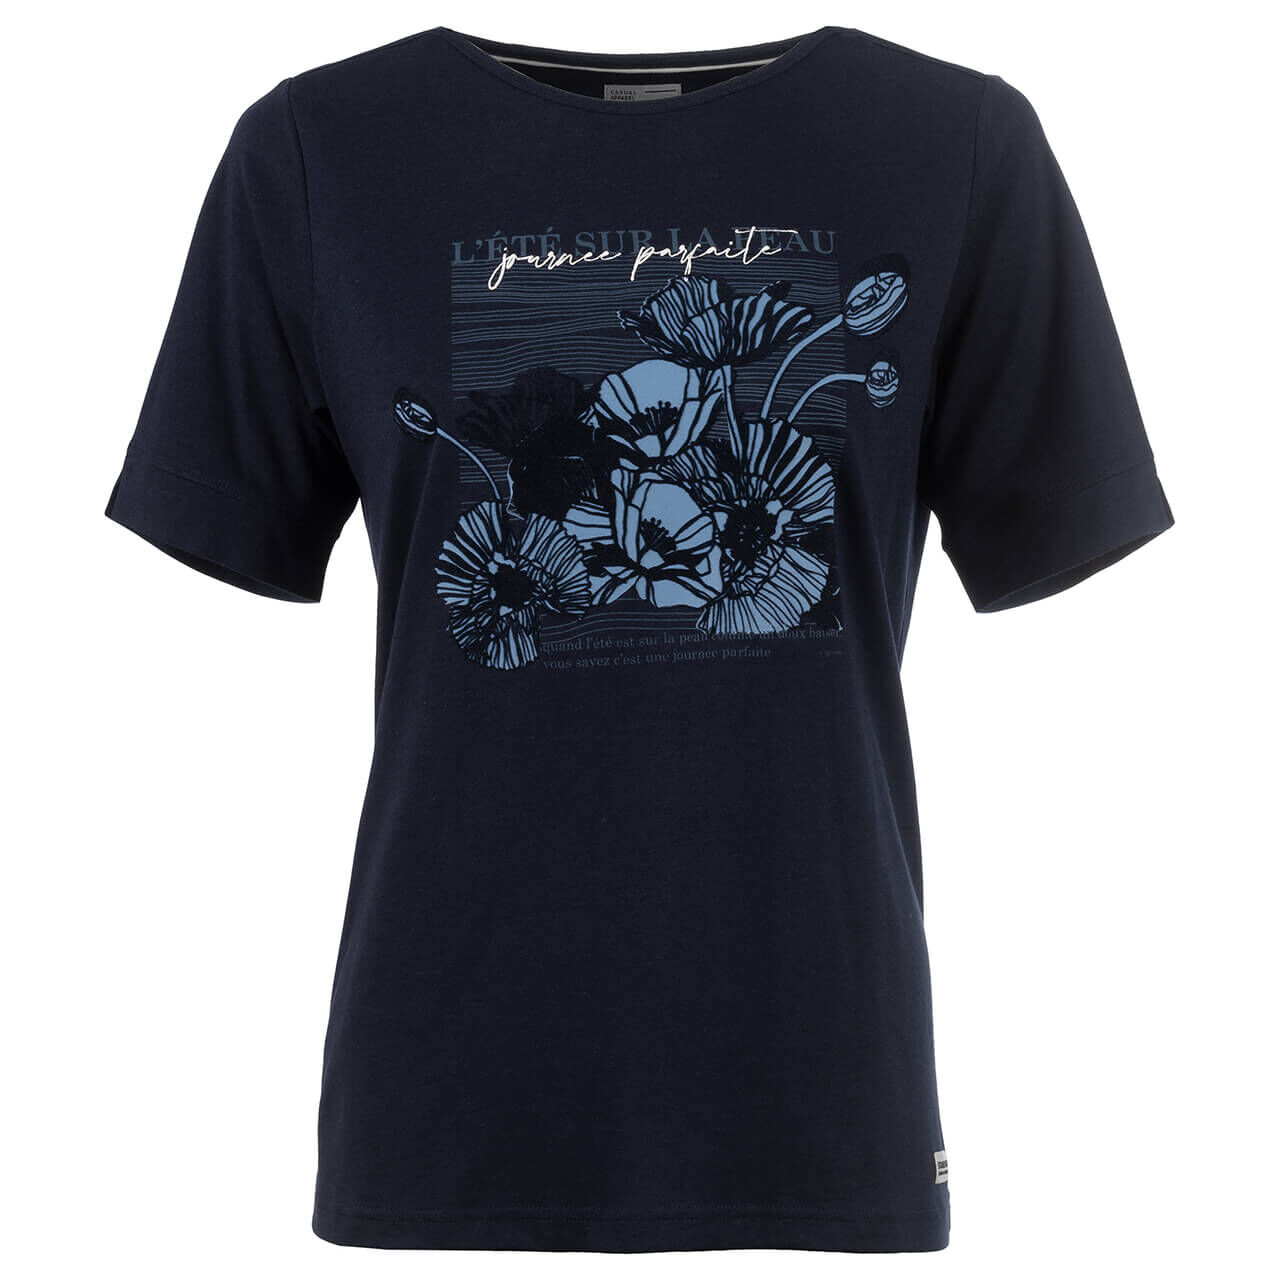 Soquesto Damen T-Shirt navy floral printed